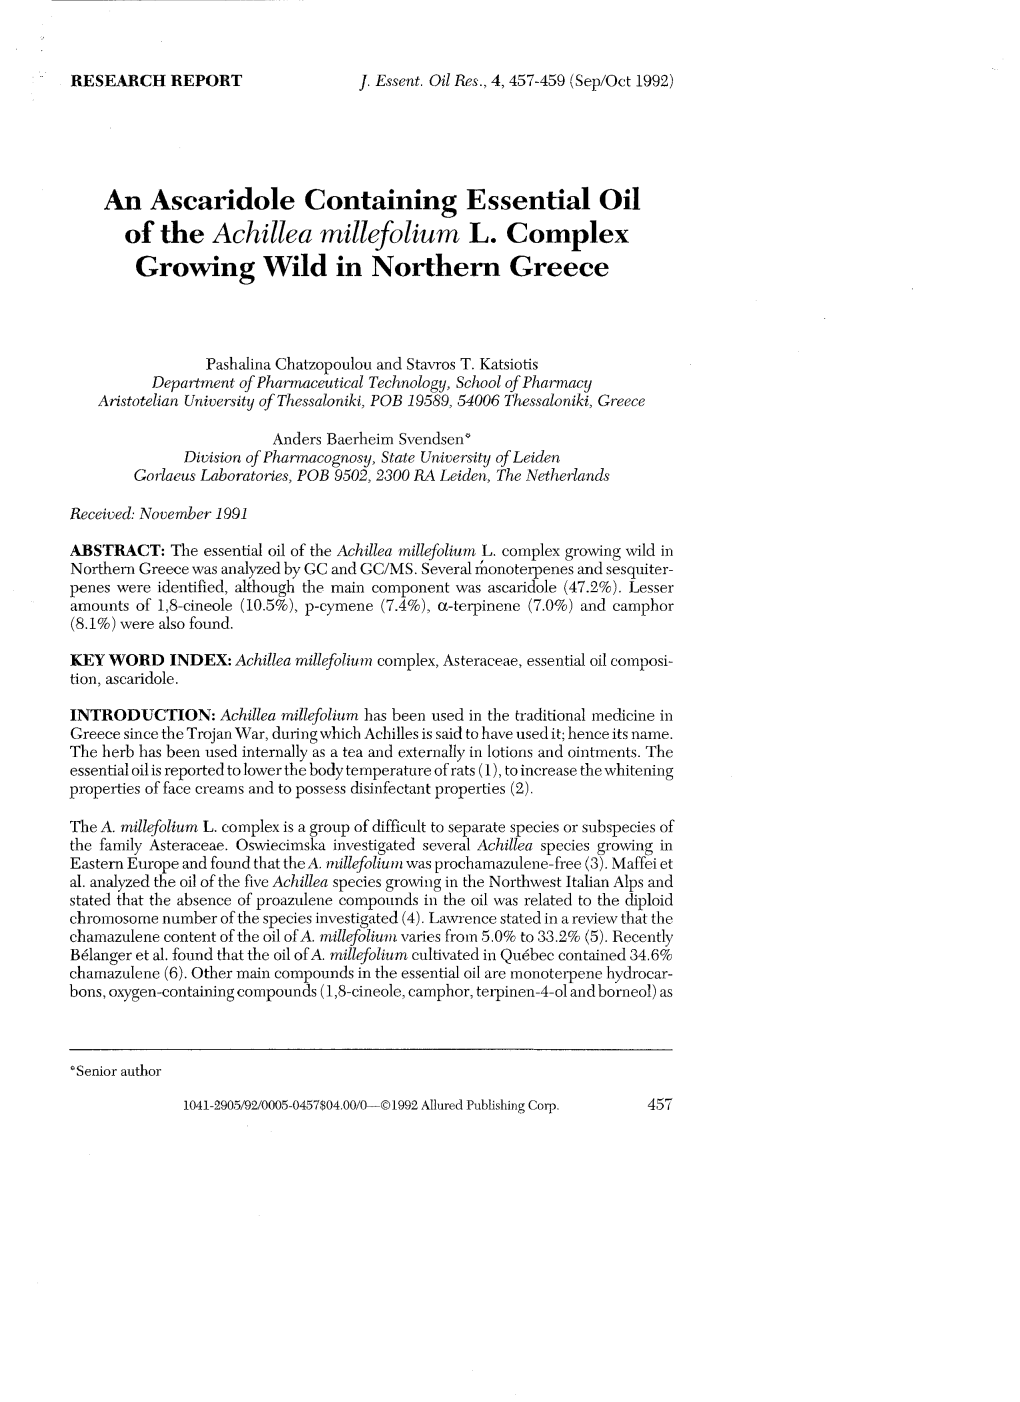 An Ascaridole Containing Essential Oil of the Achillea Rnillefolium L